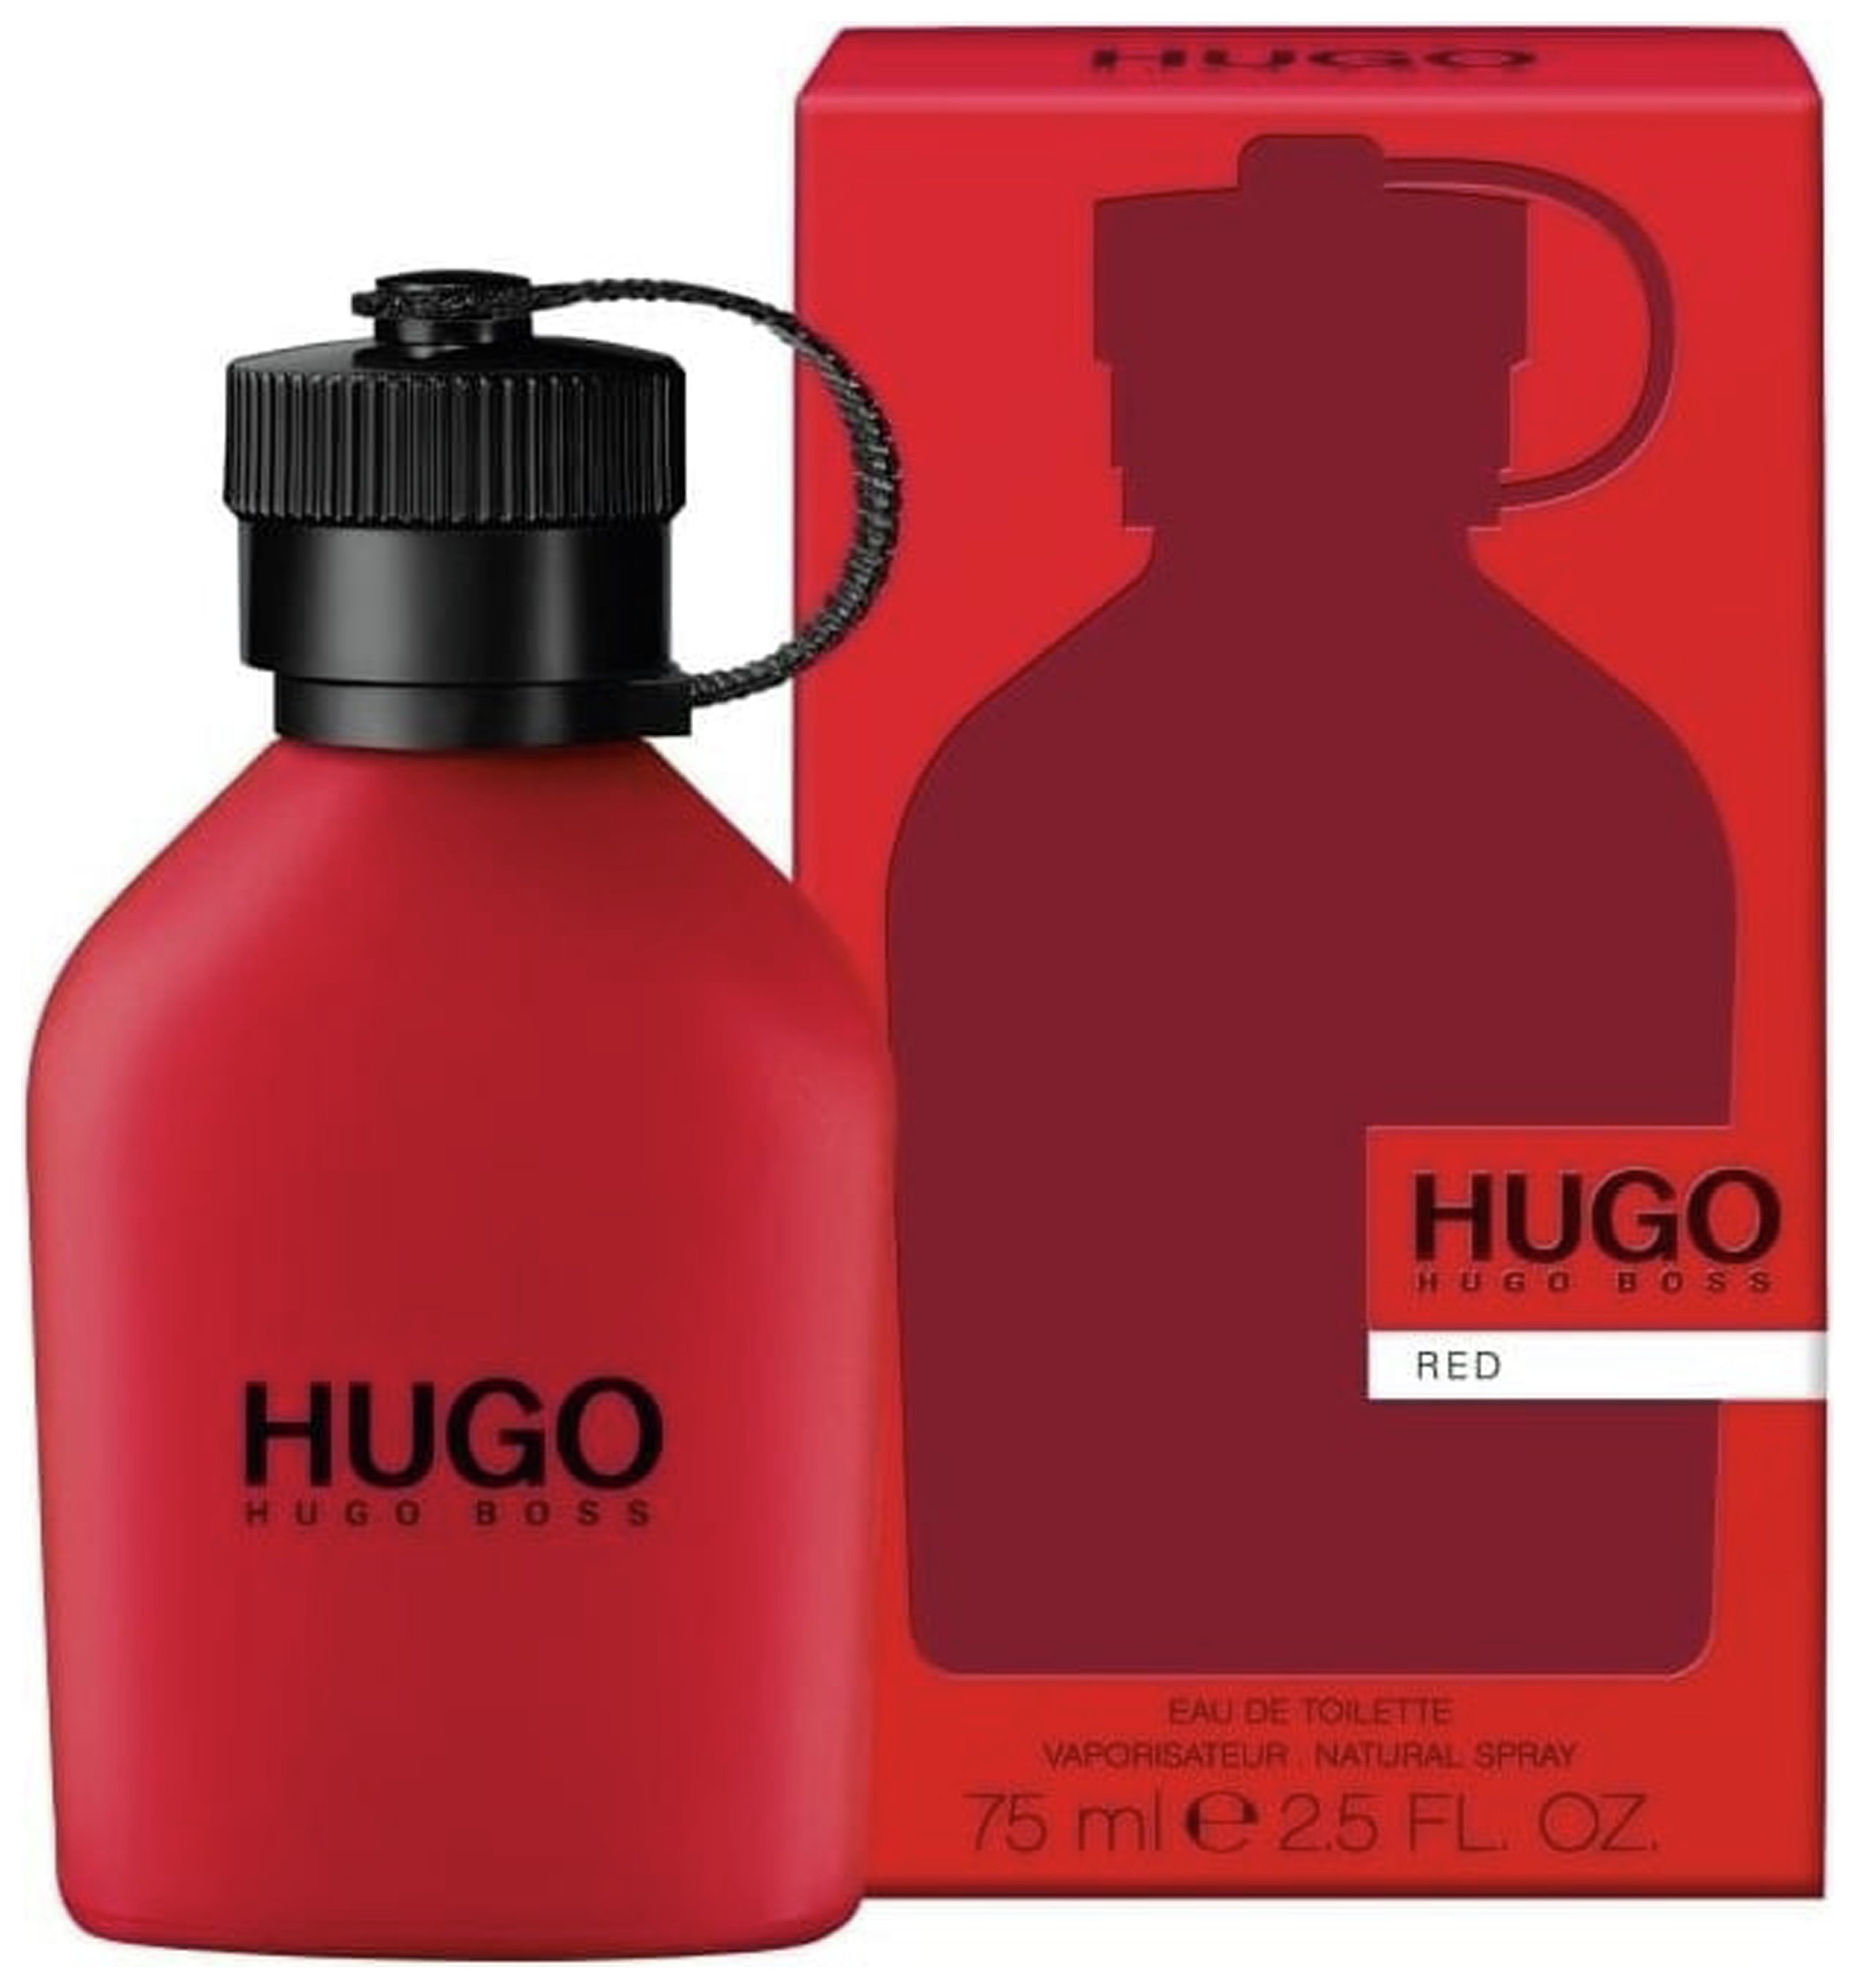 Hugo Red Eau de Toilette for Men - 75ml